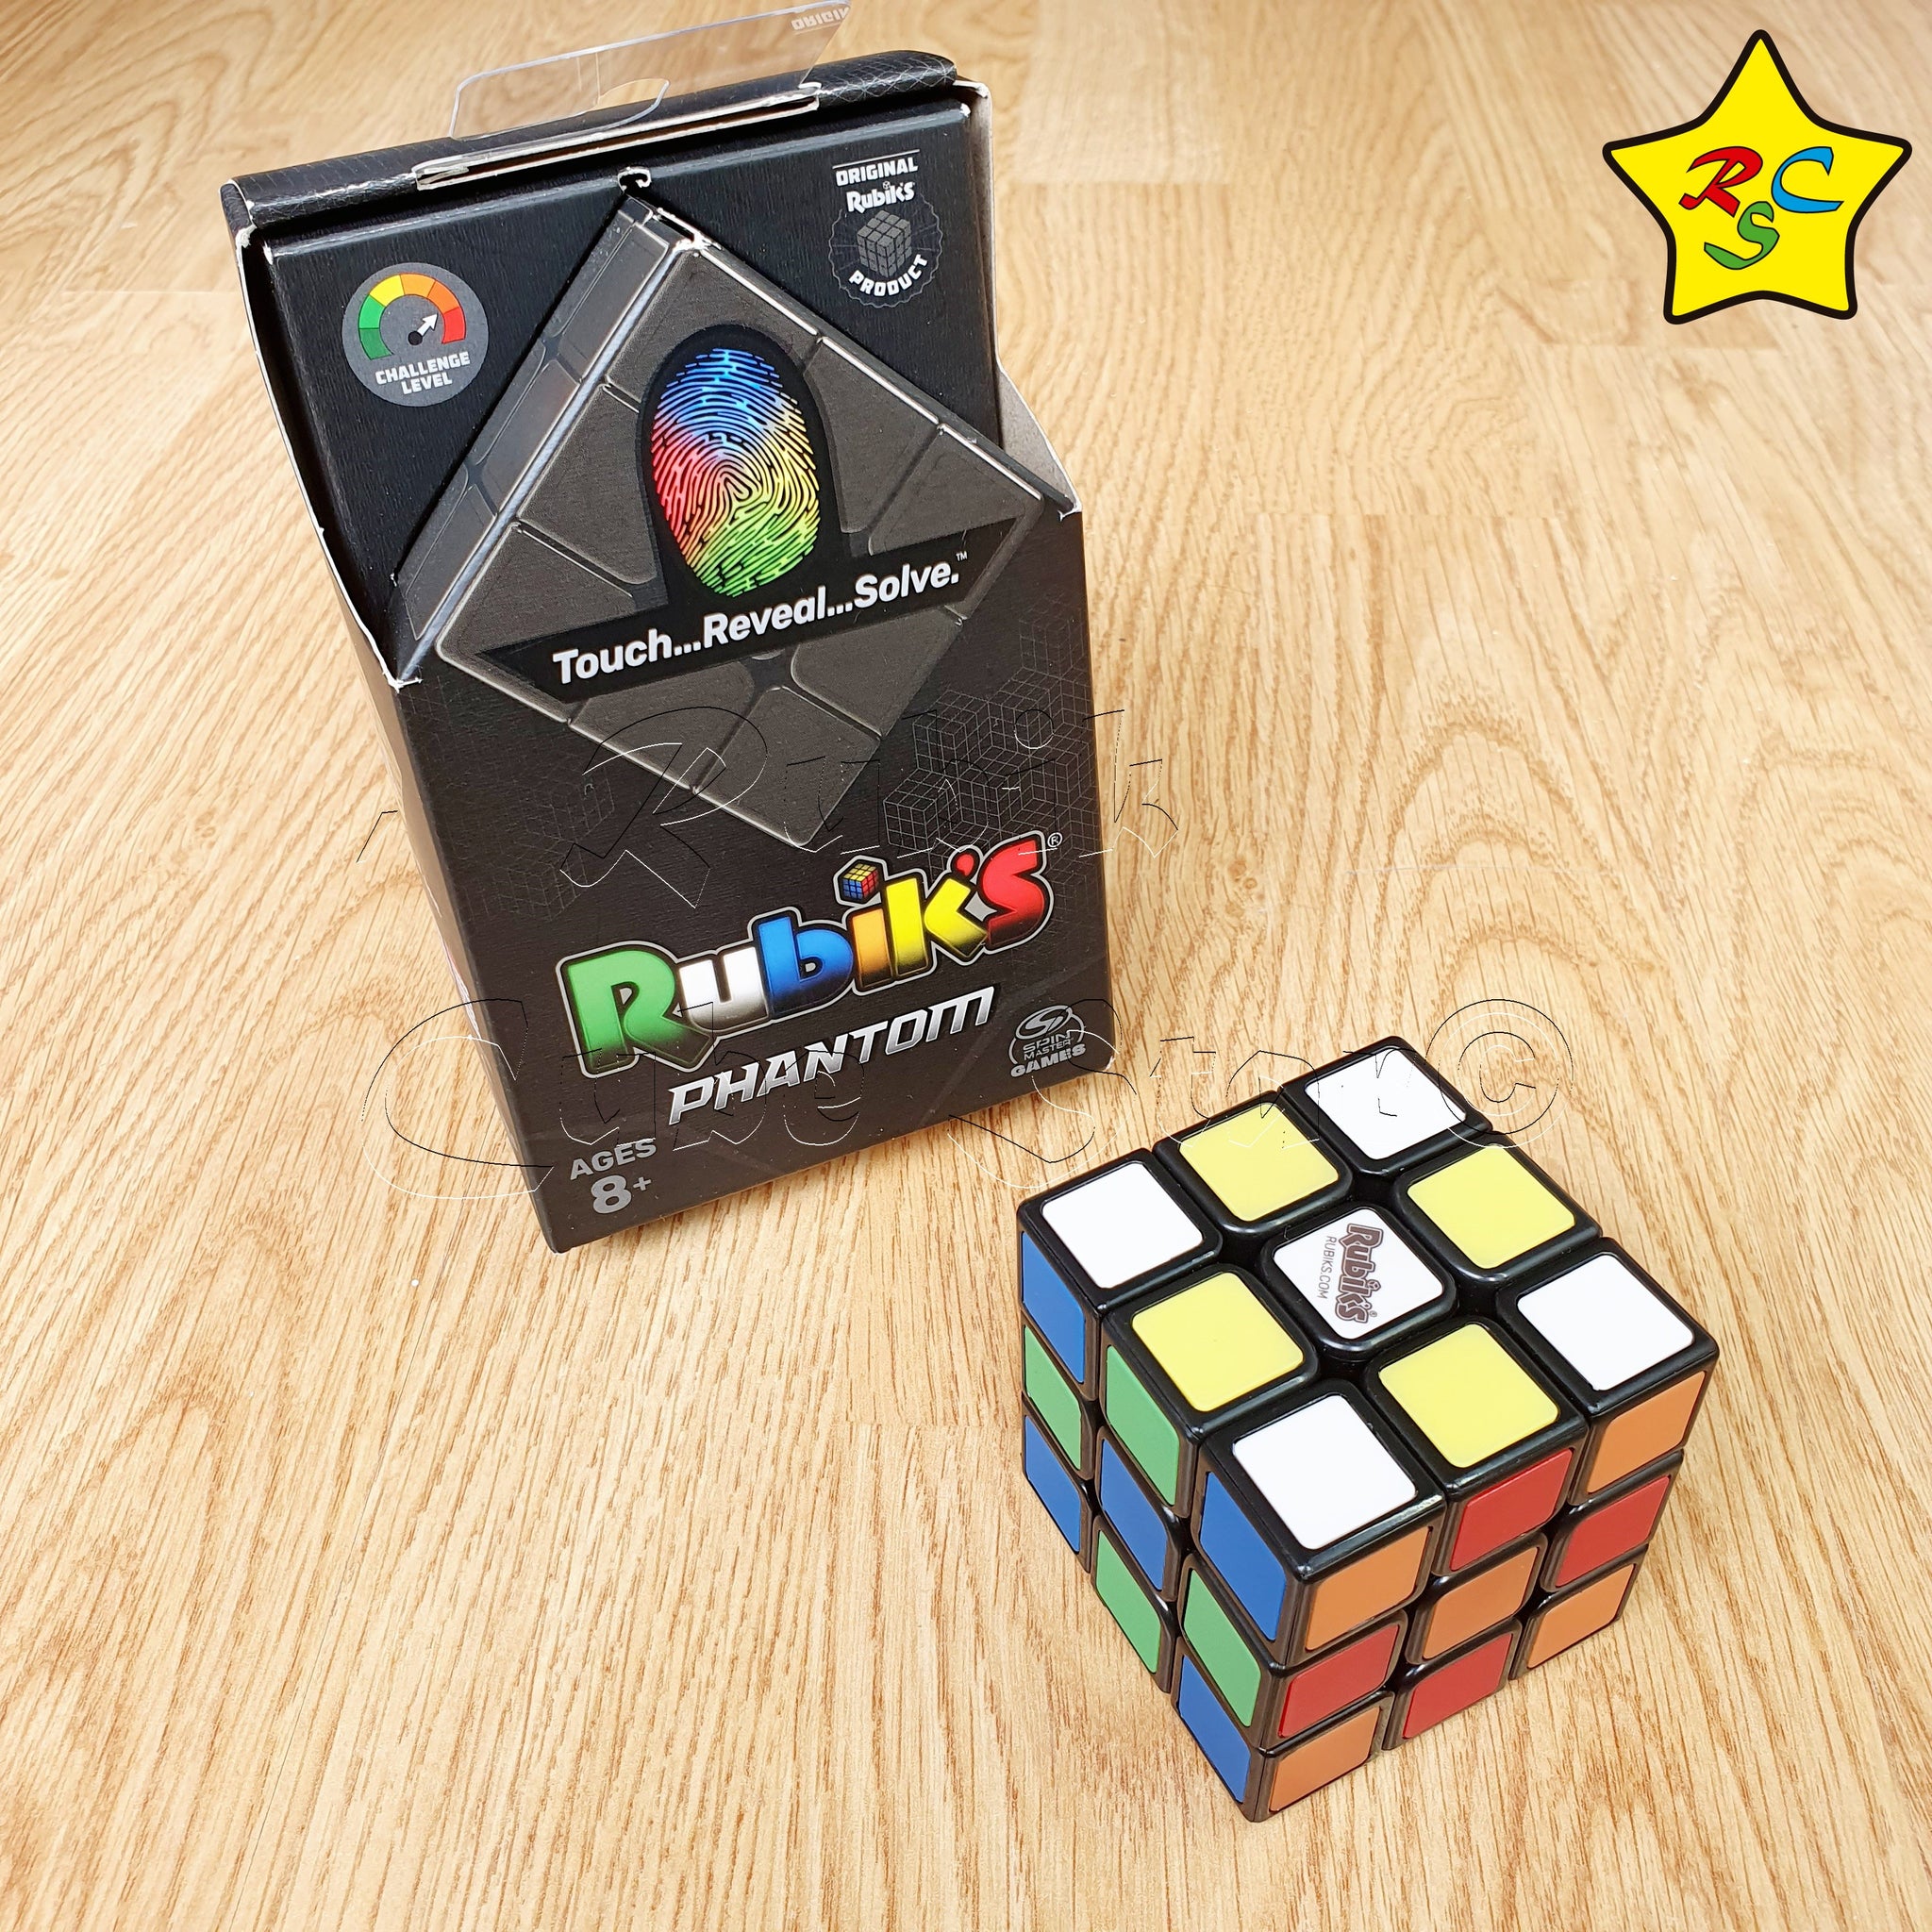 Cubo Rubik 3 Colores Cubo Rubik's 3x3 Phantom Hasbro Original Fantasma Color – Rubik Cube Star